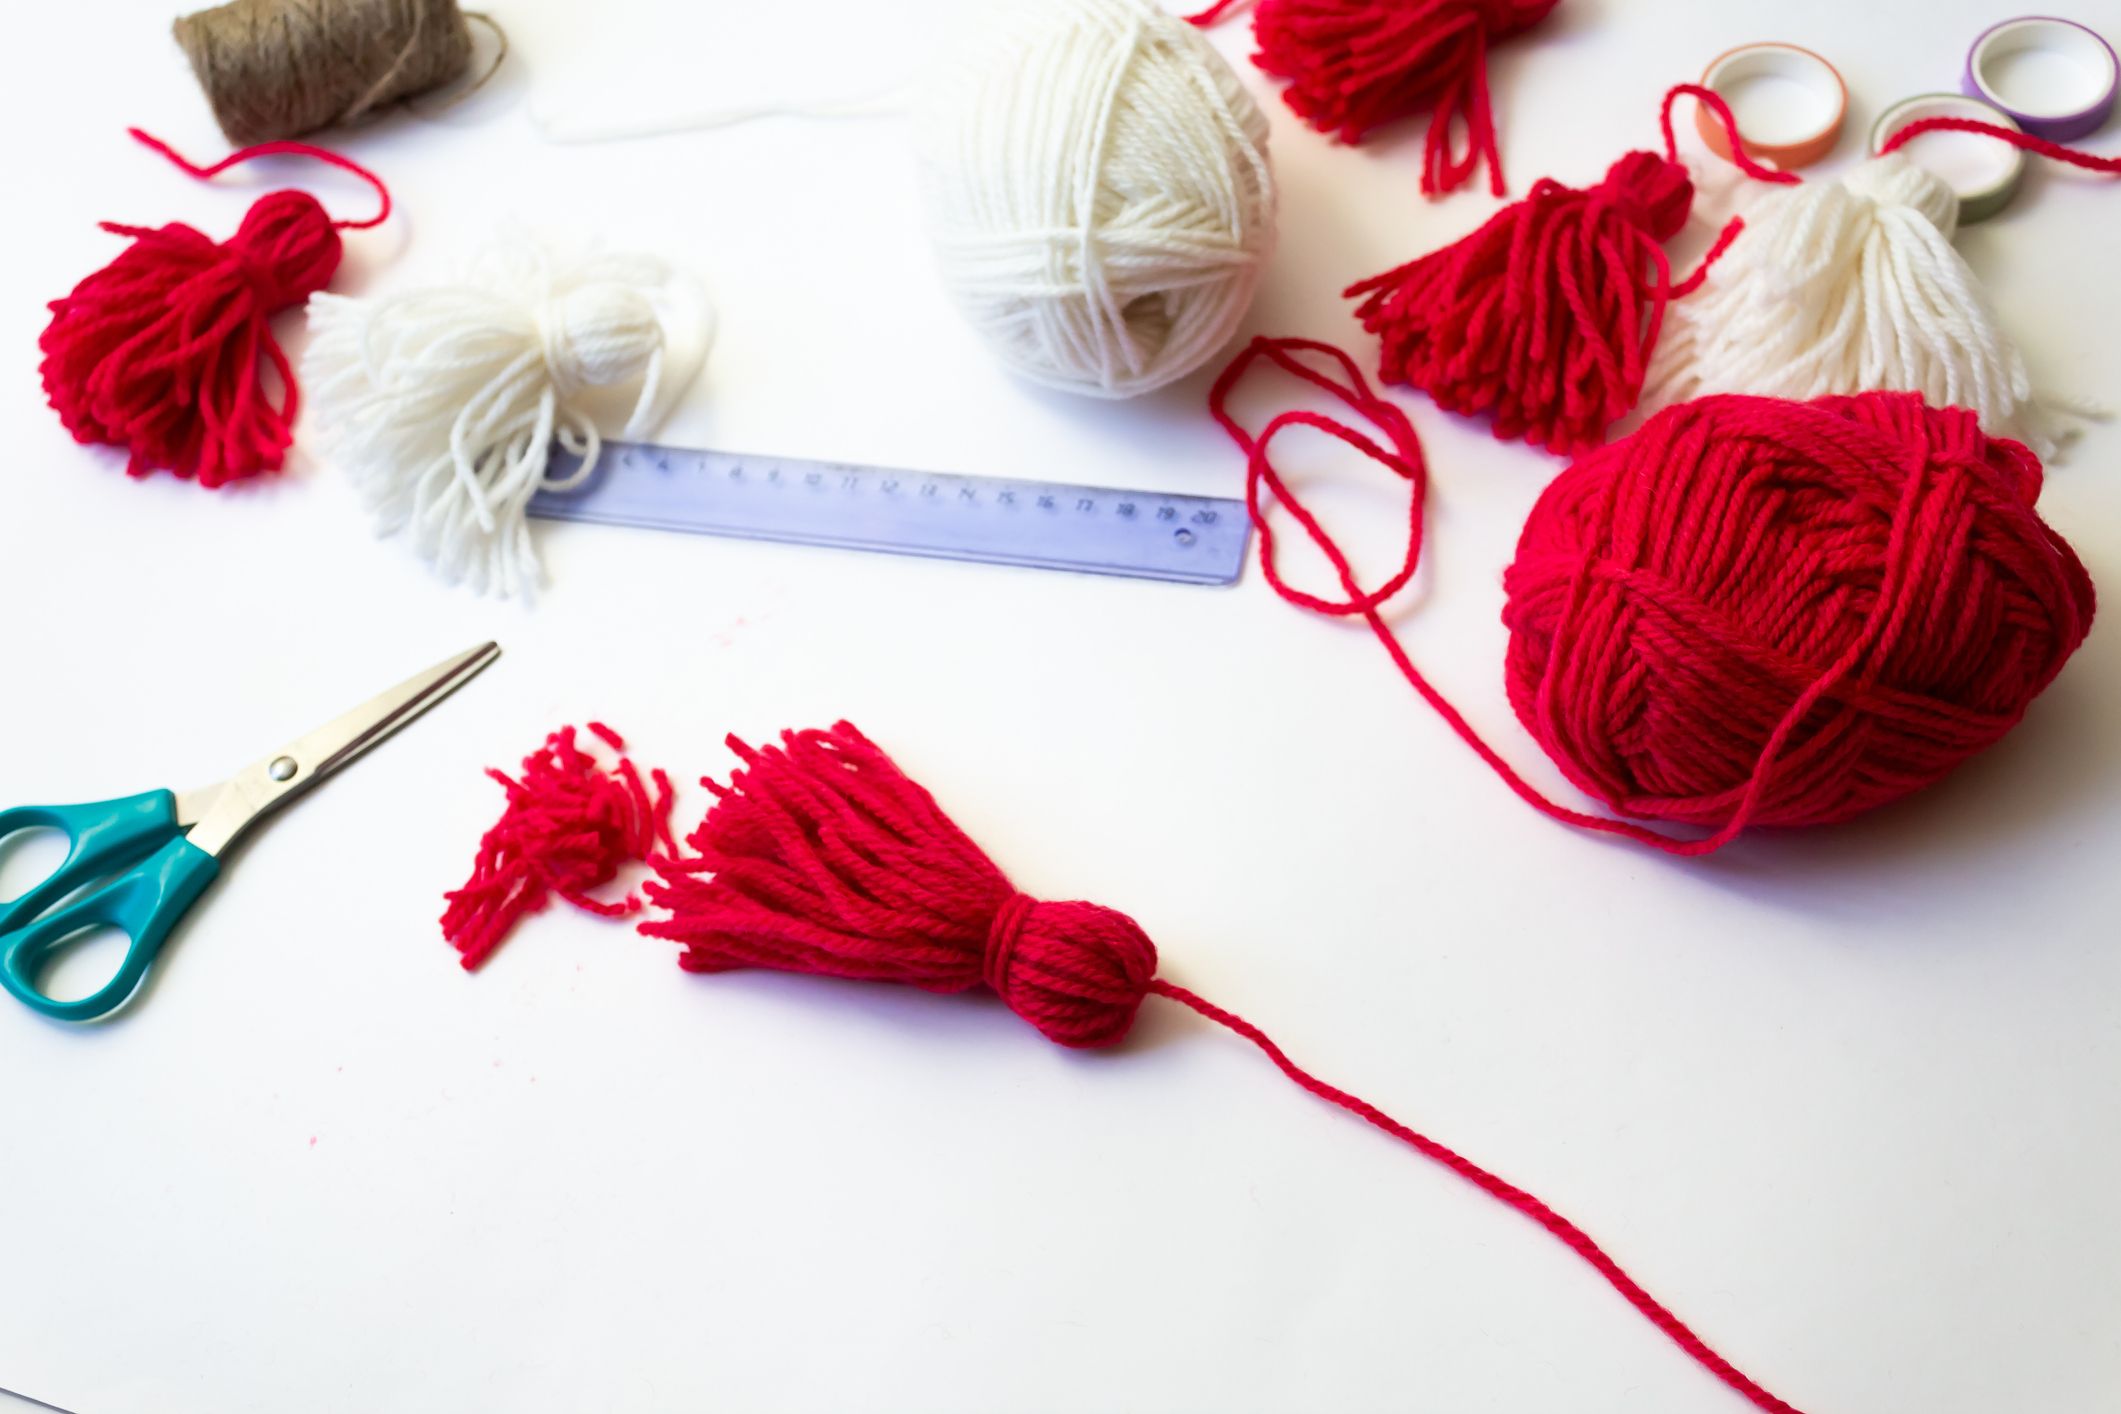 How to Make Yarn Tassels - DIY Yarn Tassel Tutorial